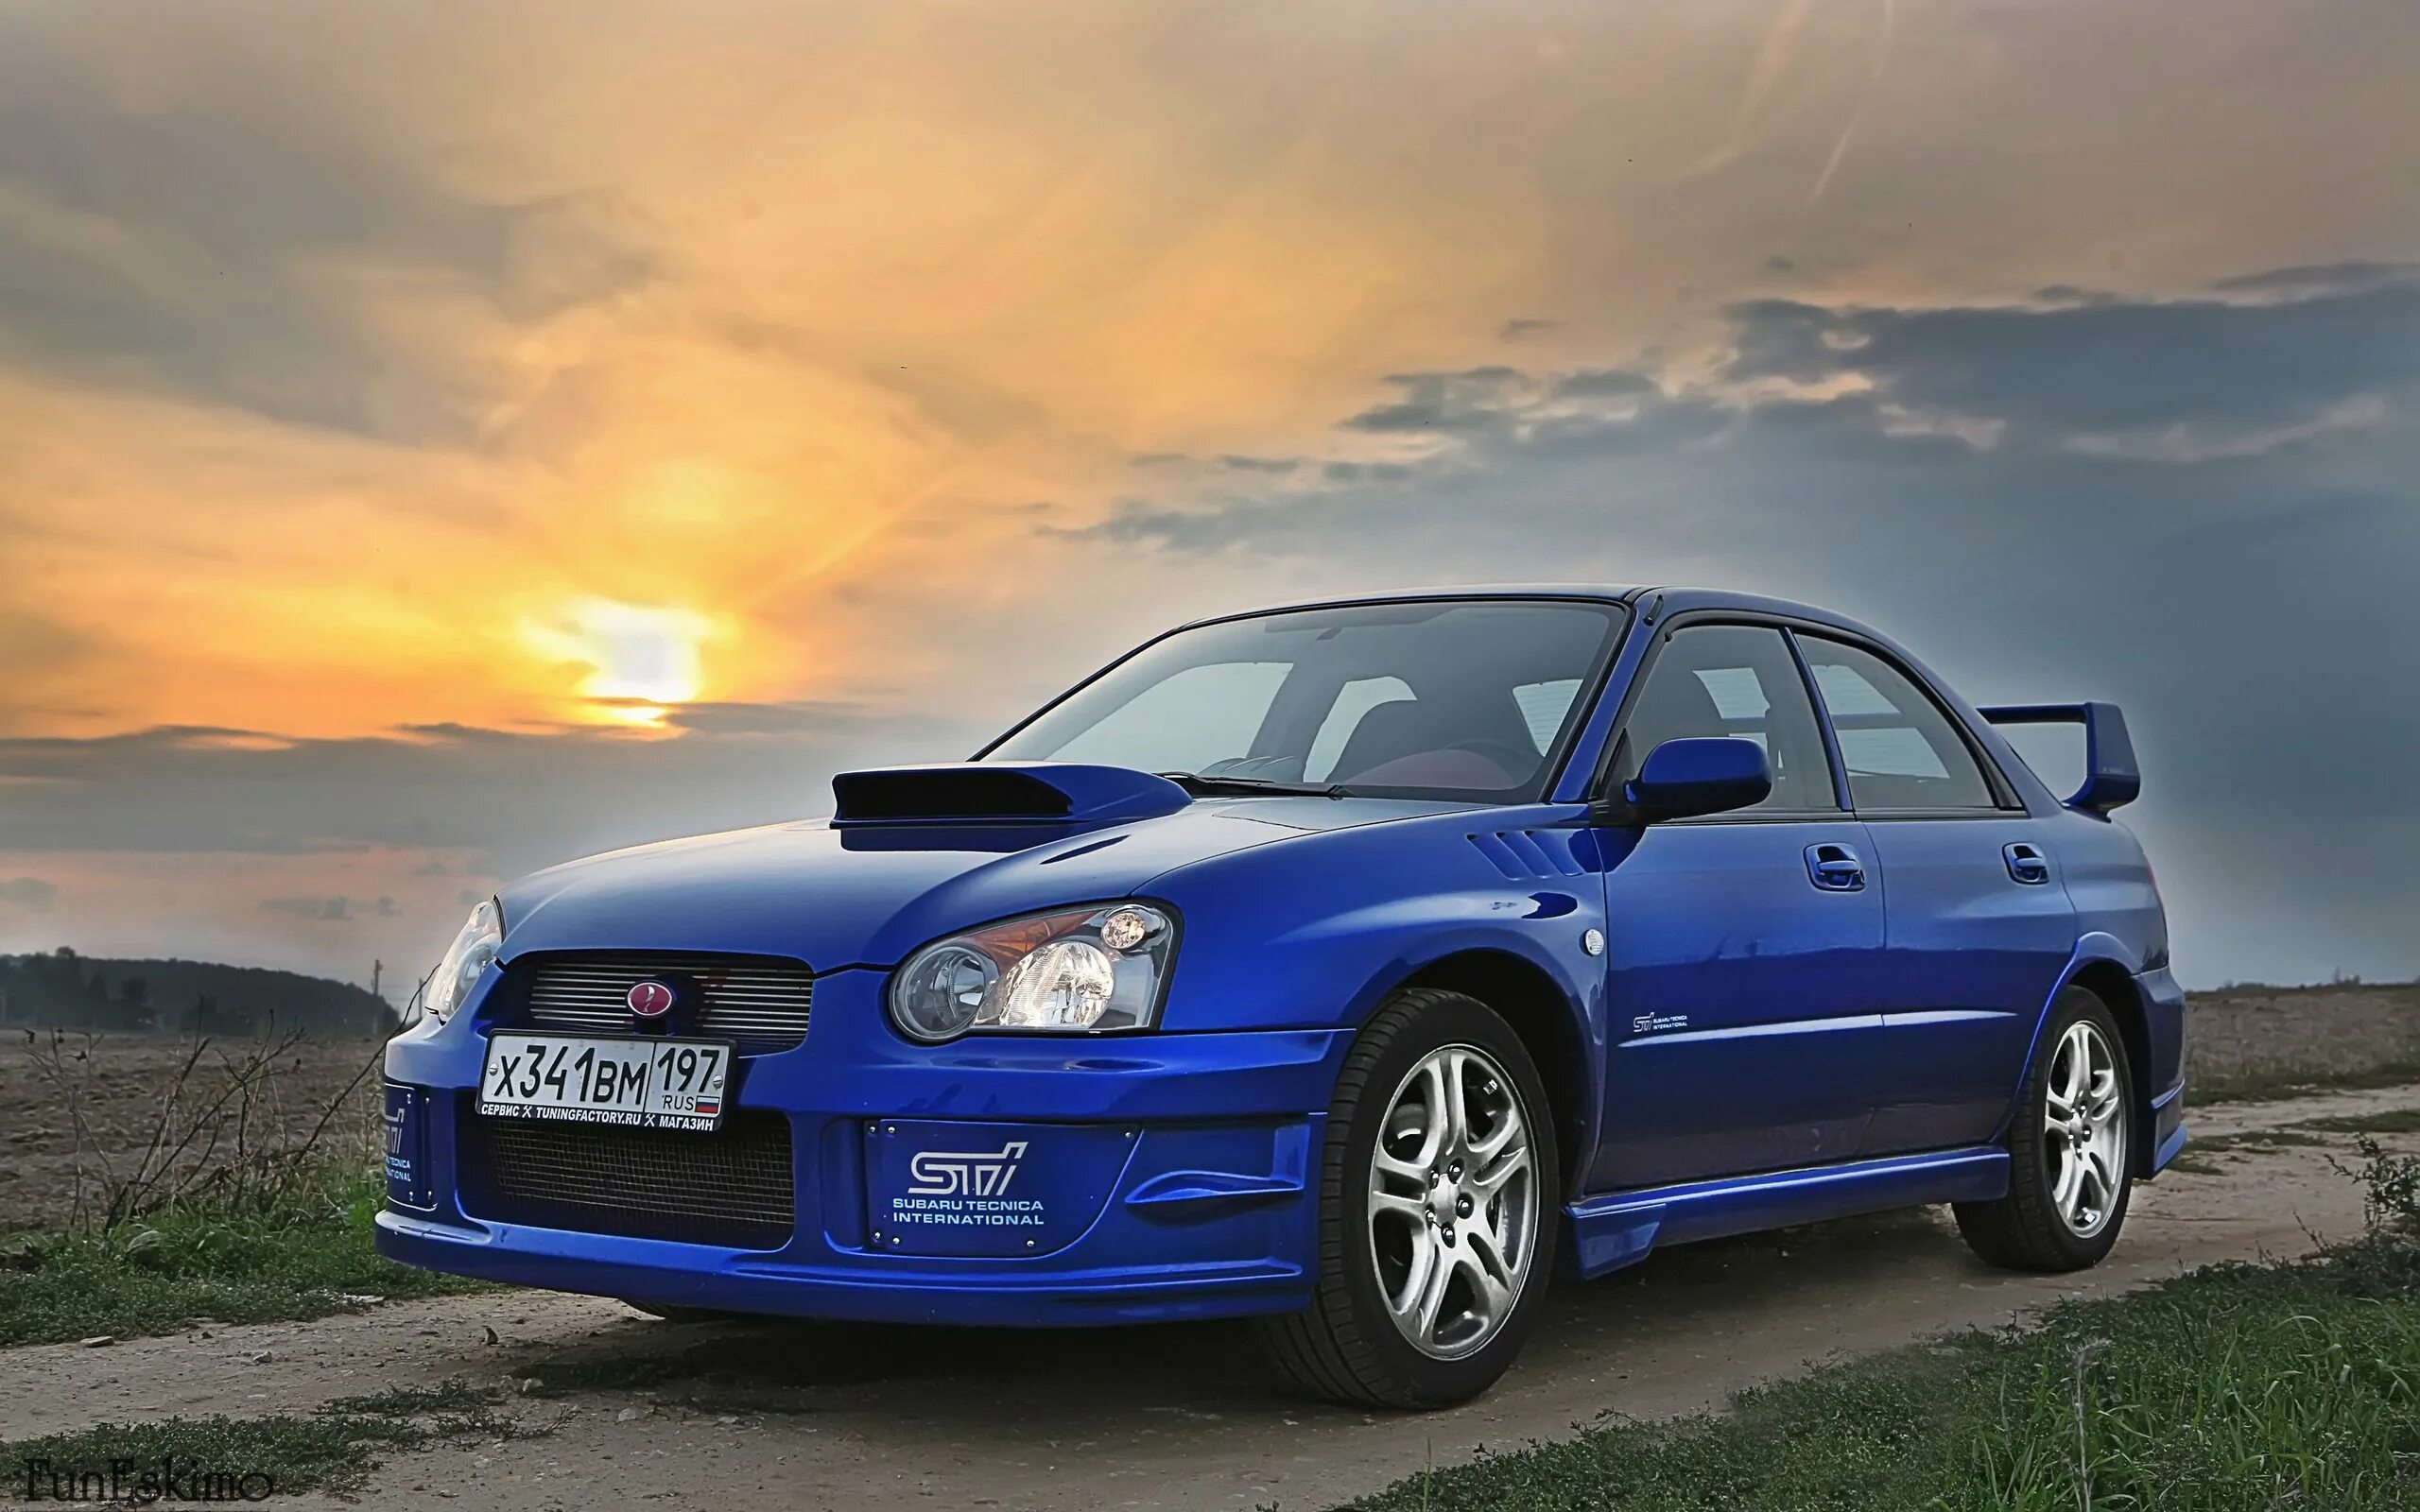 Subaru Impreza WRX STI. Subaru Impreza WRX 2000. Subaru Impreza WRX STI 2004. Subaru WRX STI синяя. Suba ru